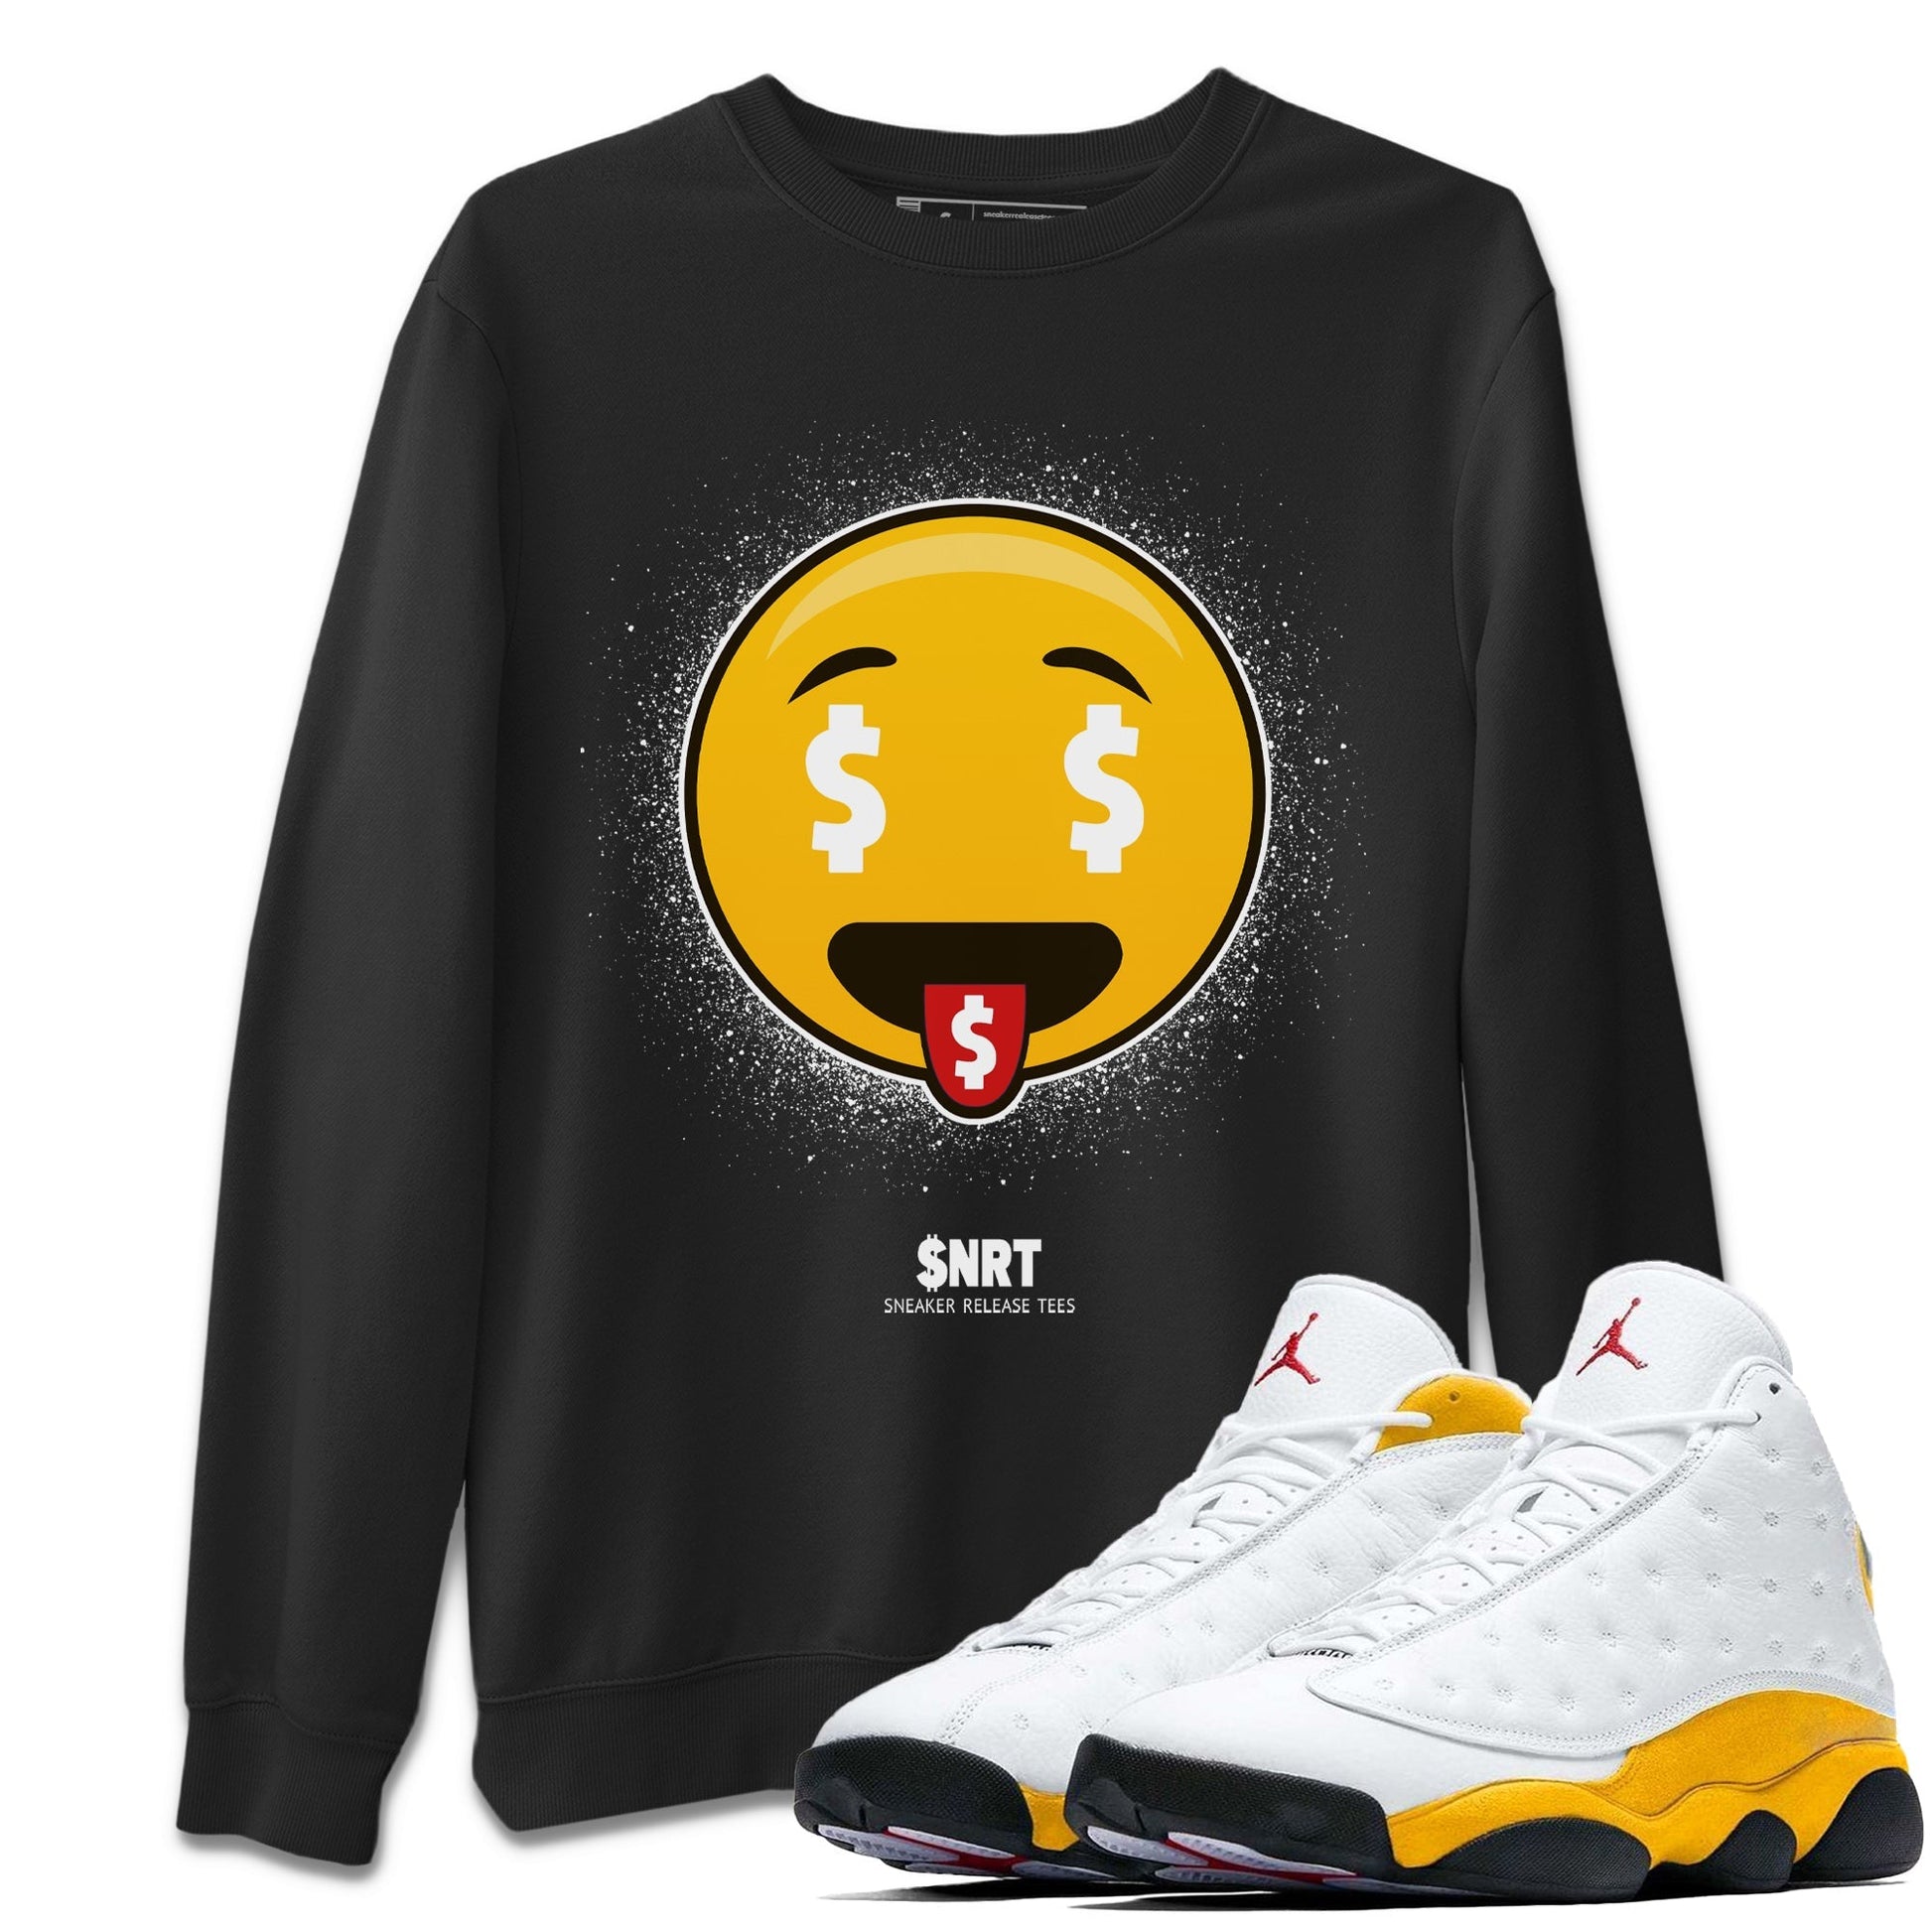 Jordan 13 Del Sol Sneaker Match Tees Rich Emoji Sneaker Tees Jordan 13 Del Sol Sneaker Release Tees Unisex Shirts